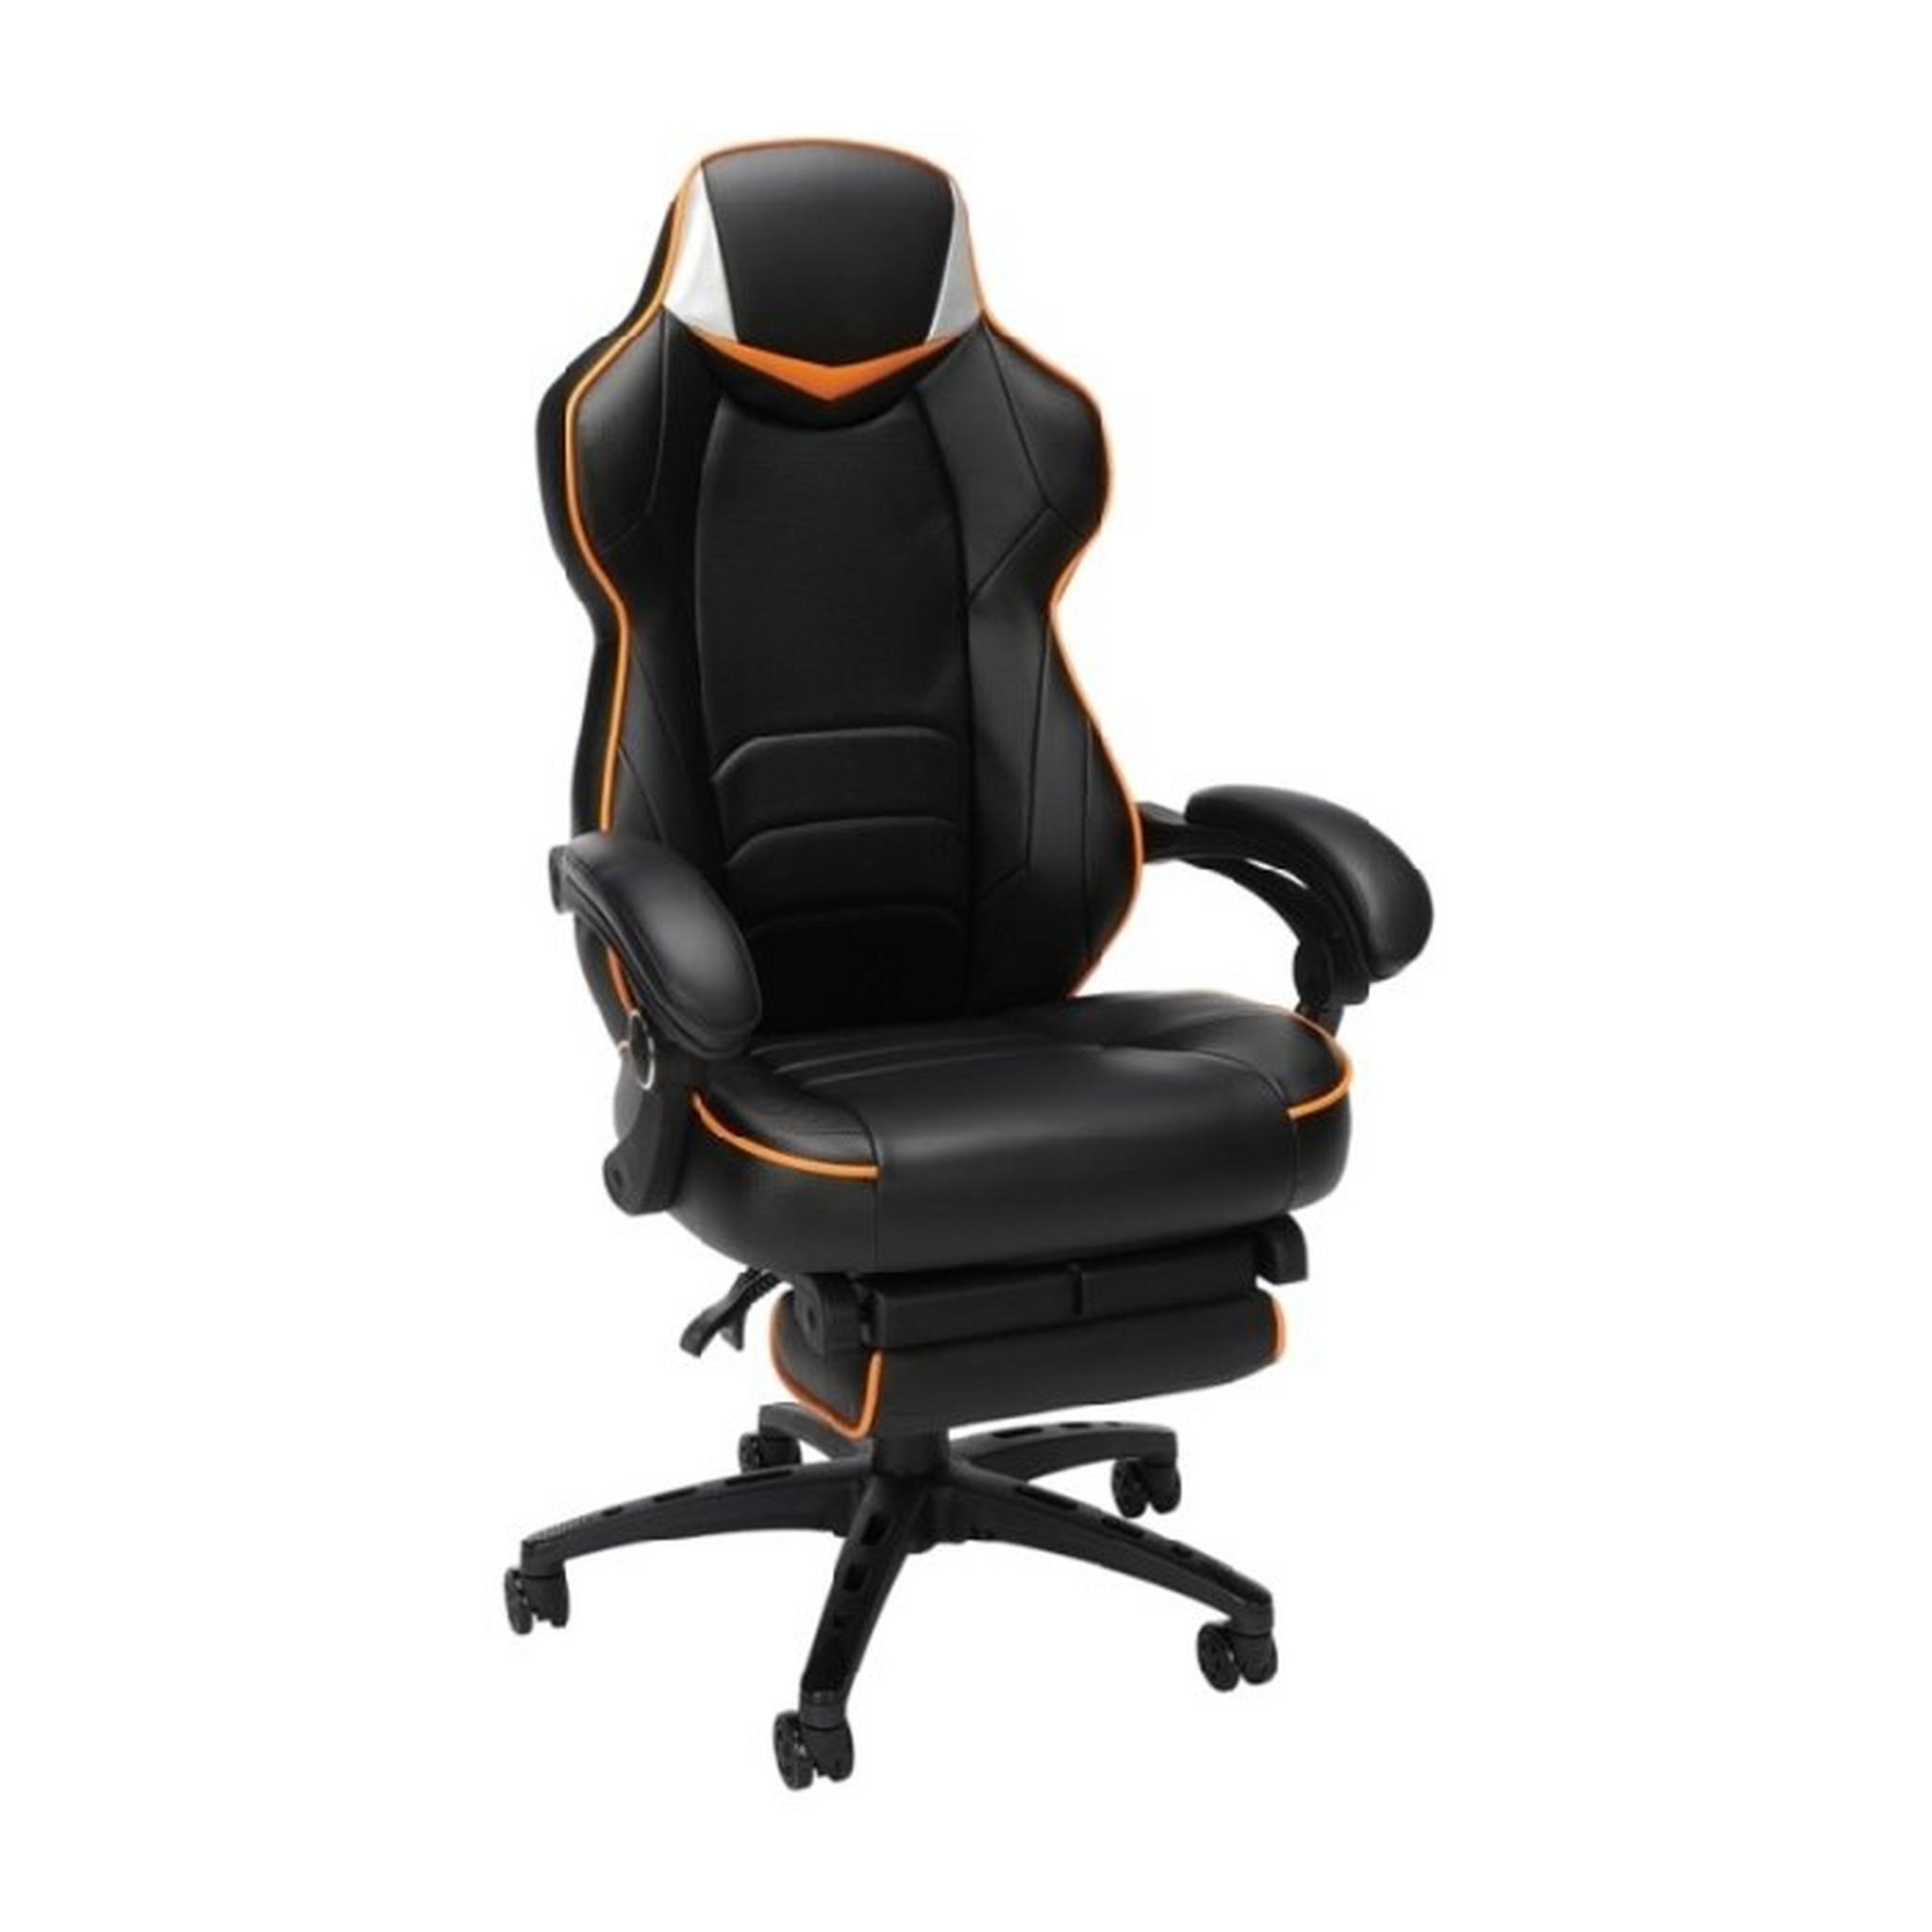 Respawn Fortnite Omega XI Gaming Chair